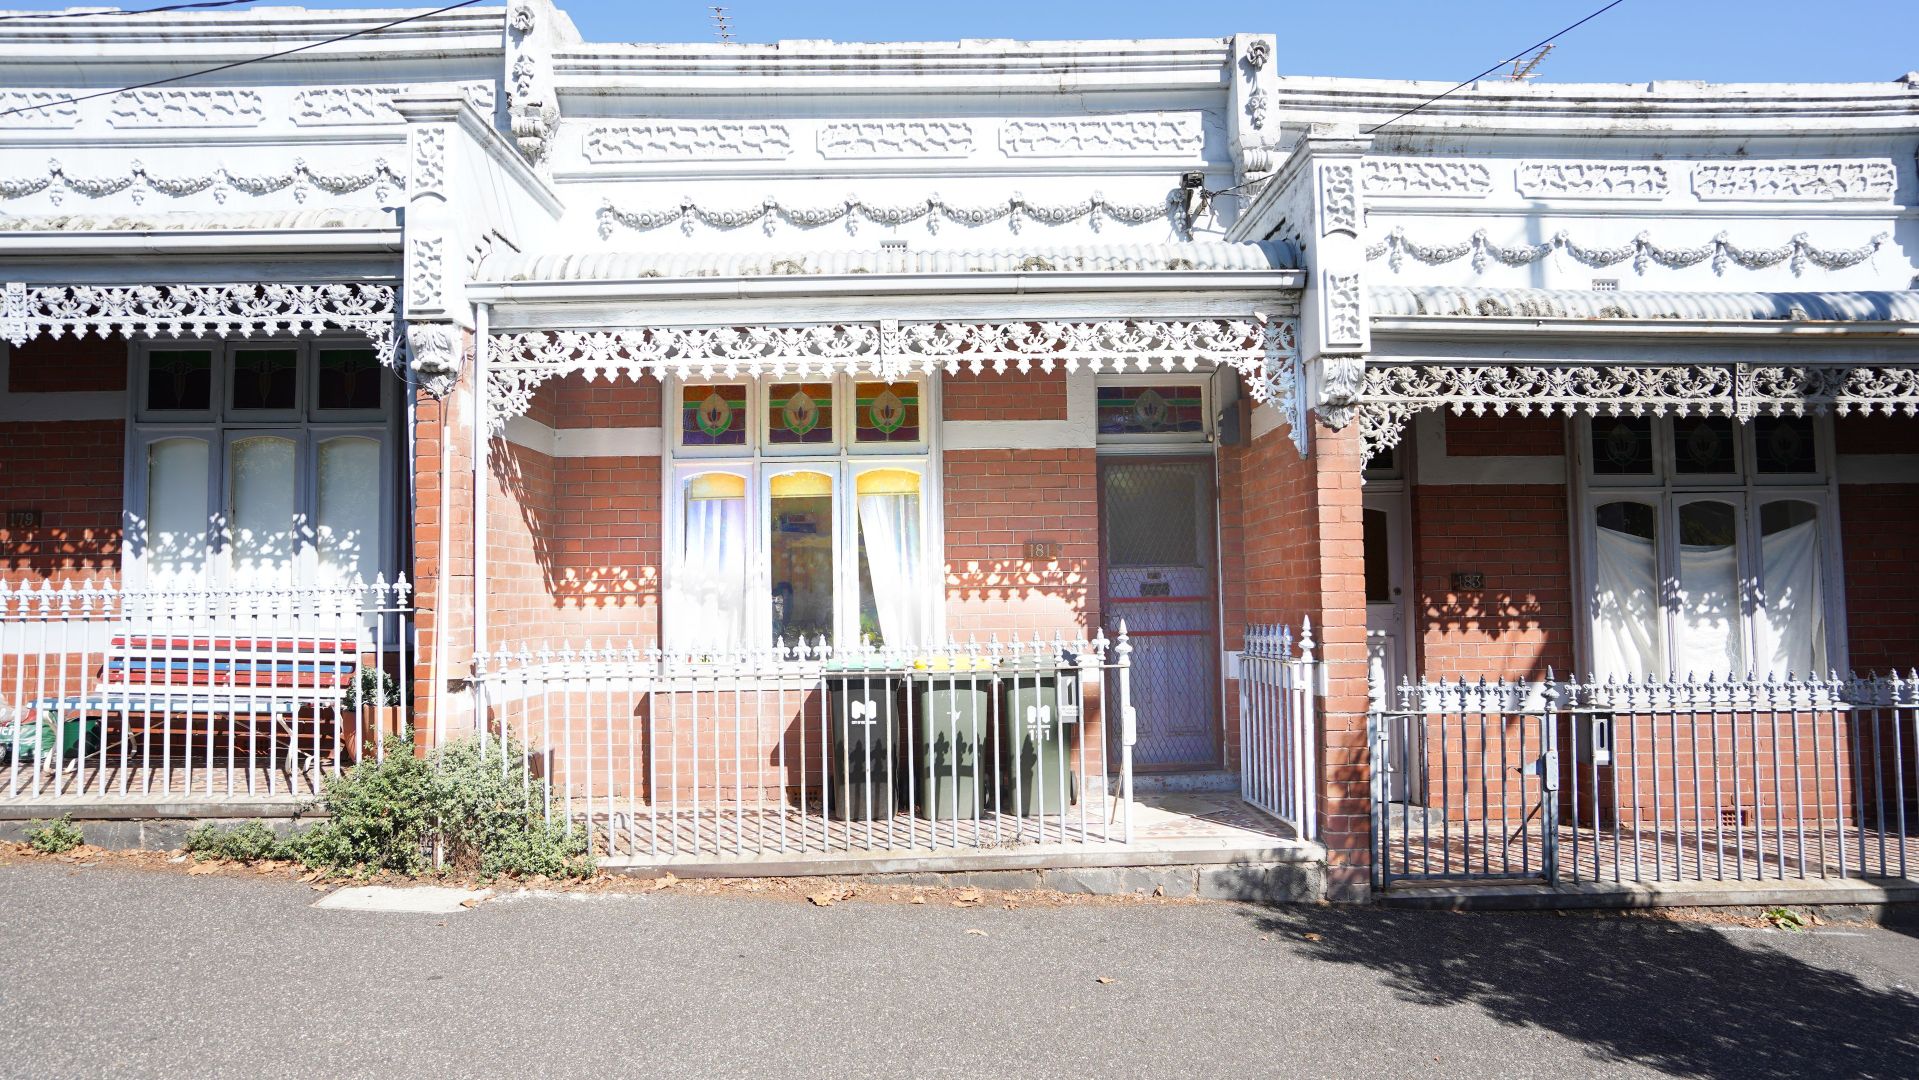 181 Errol Street, North Melbourne | Property History & Address Research